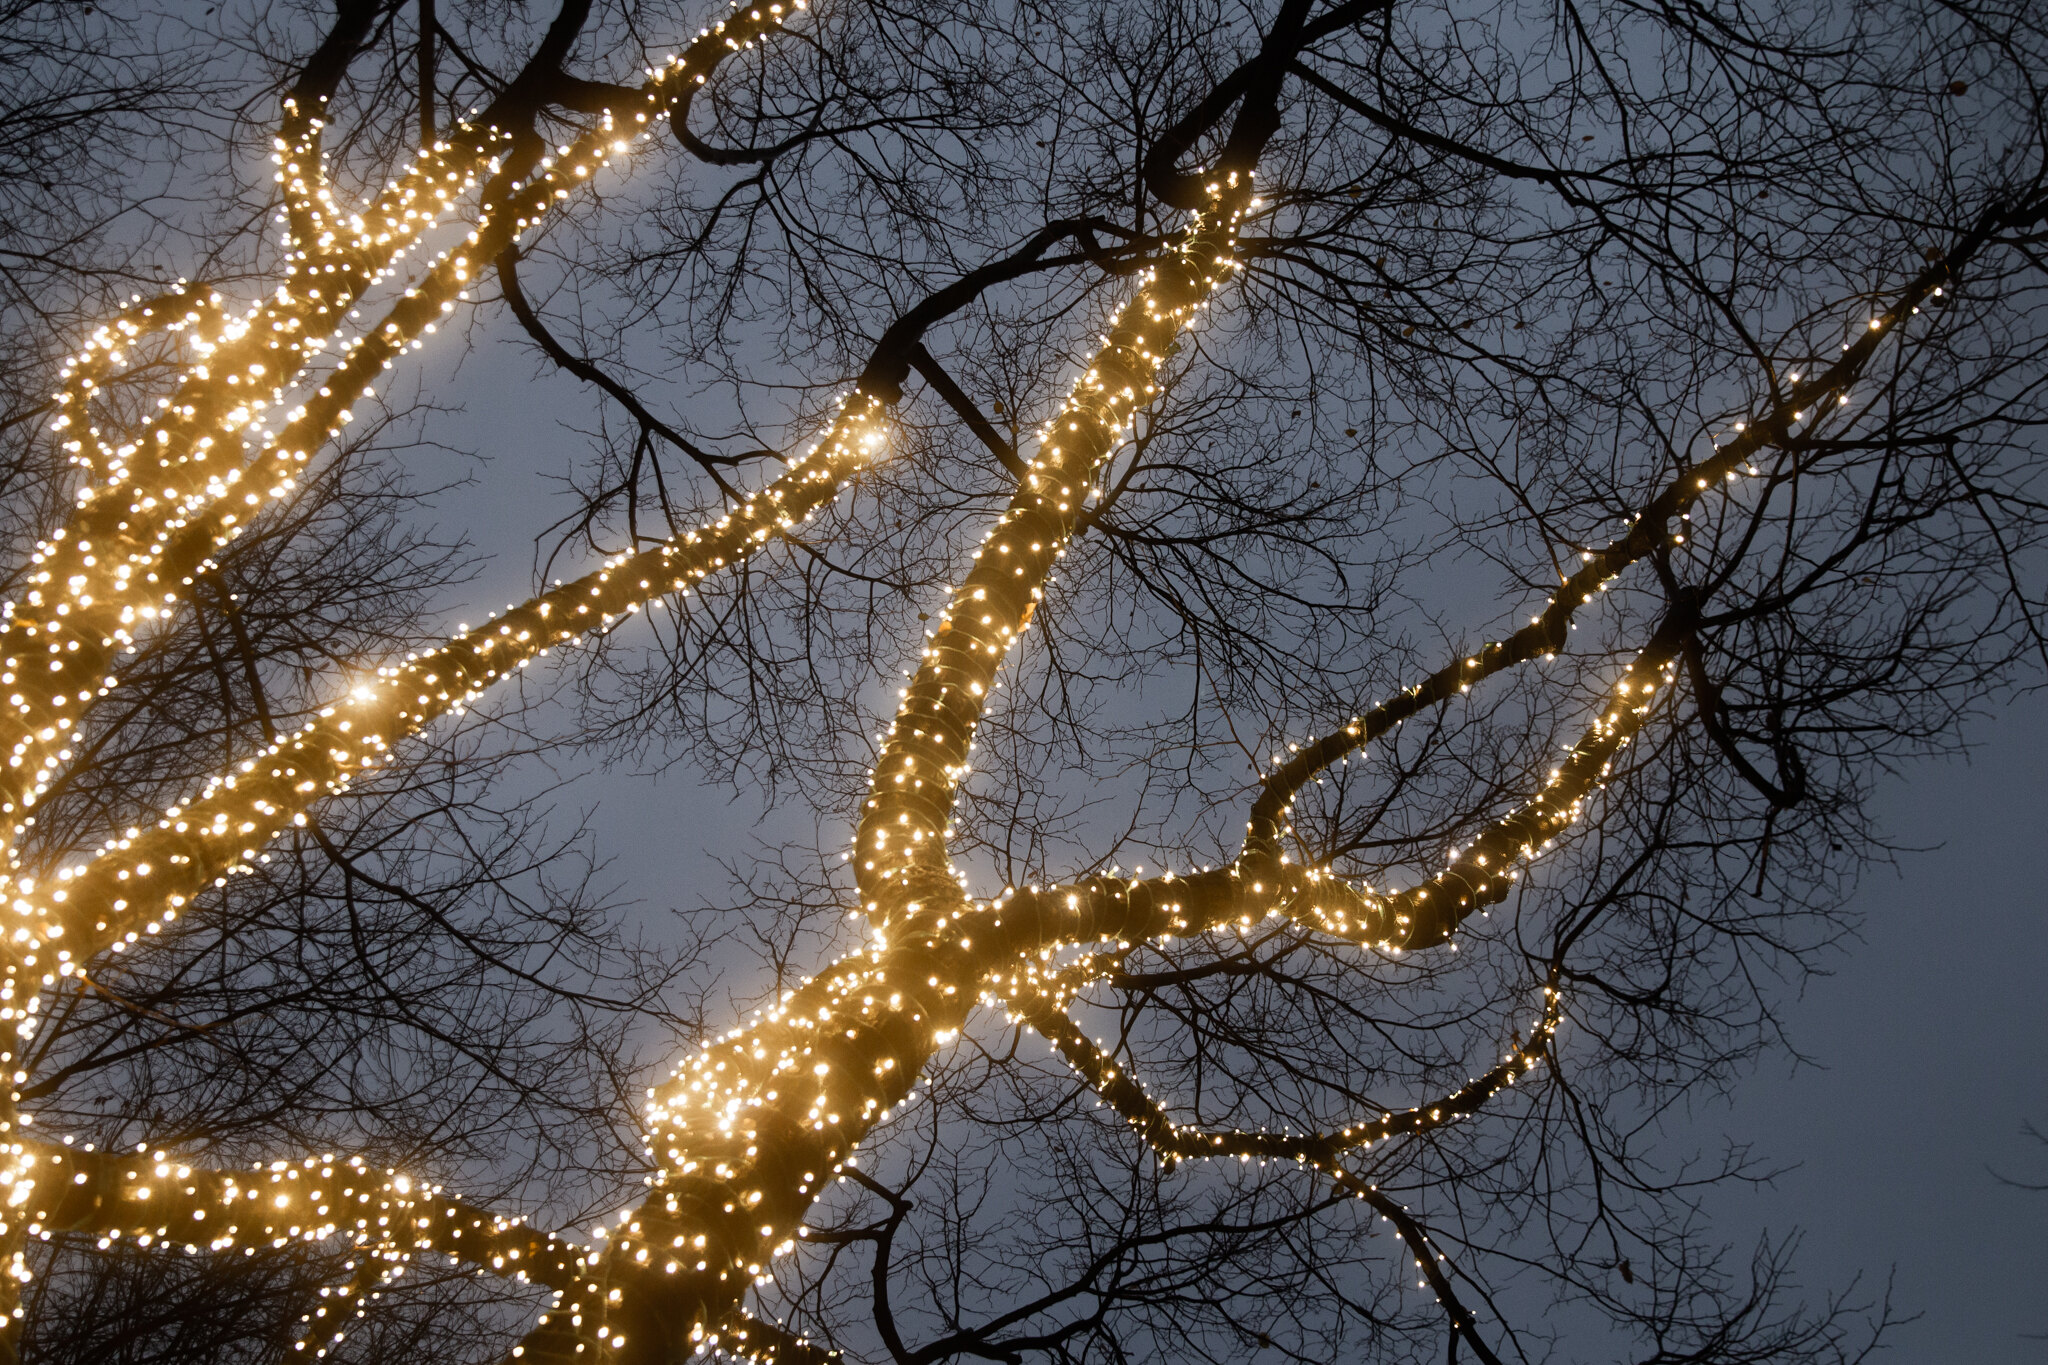 ‘A precarious position’: Inside Tree Lighting